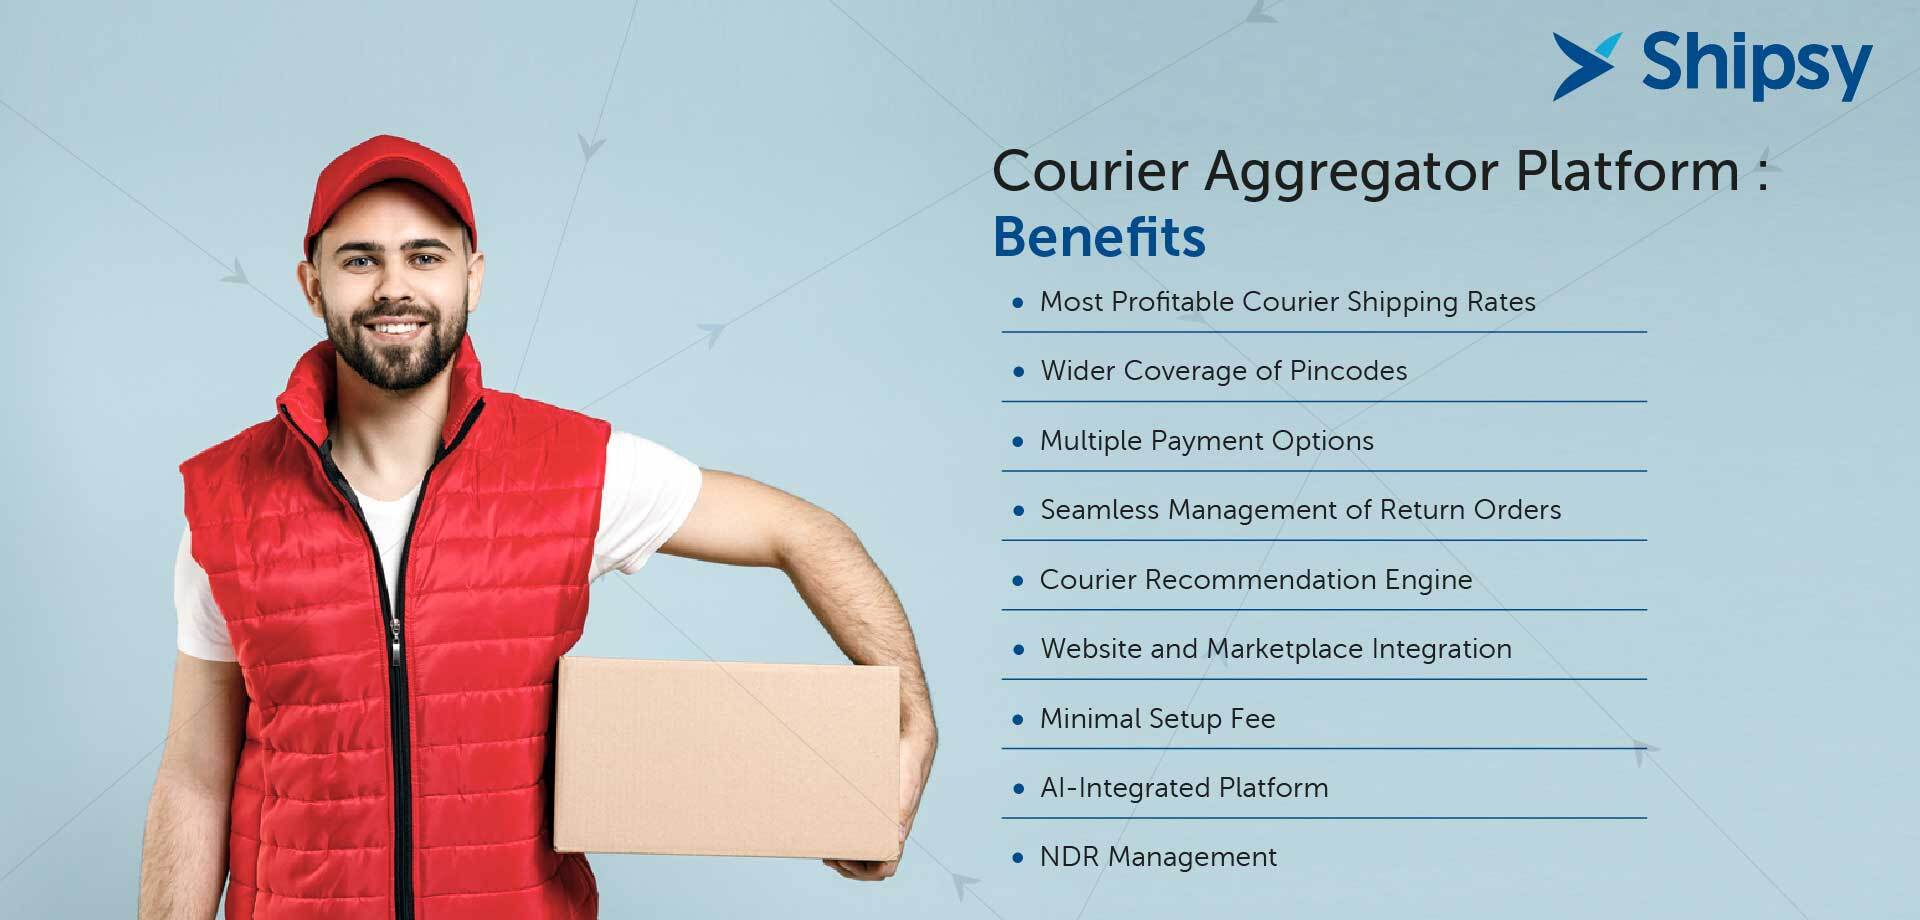 Courier aggregator platform benefits
